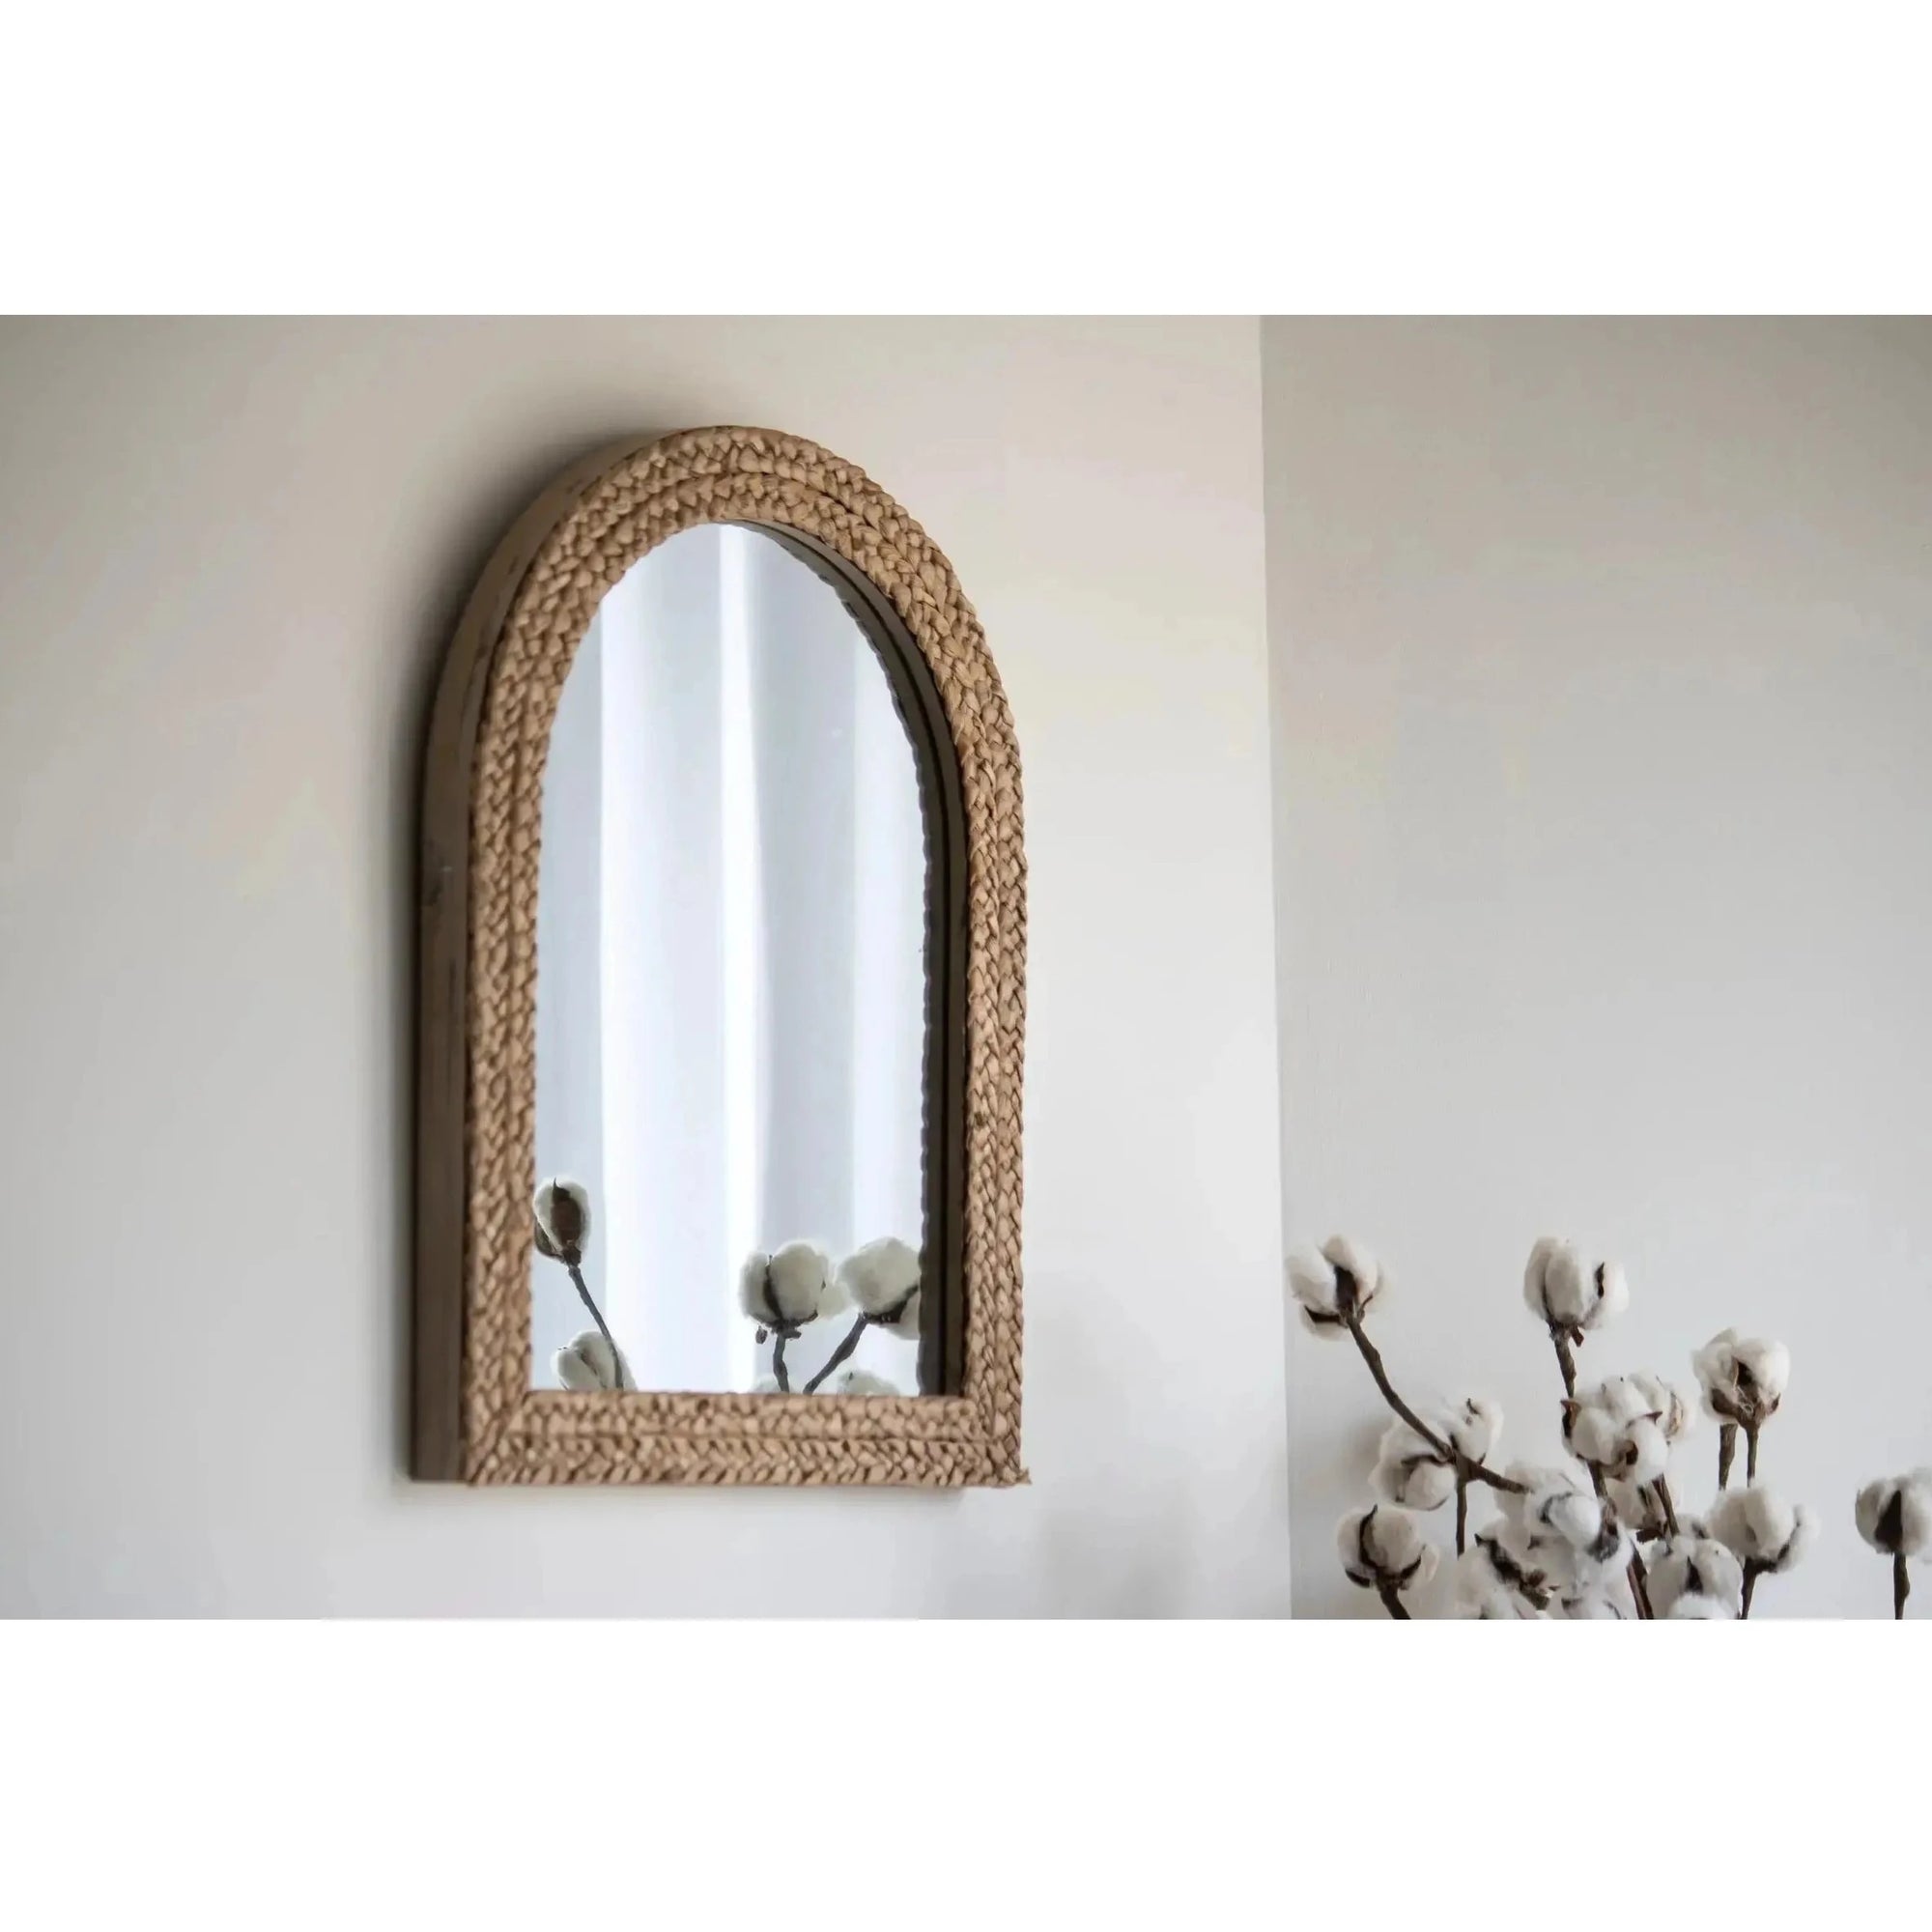 Braided Seagrass Framed Mirror     | Industrial Farm Co